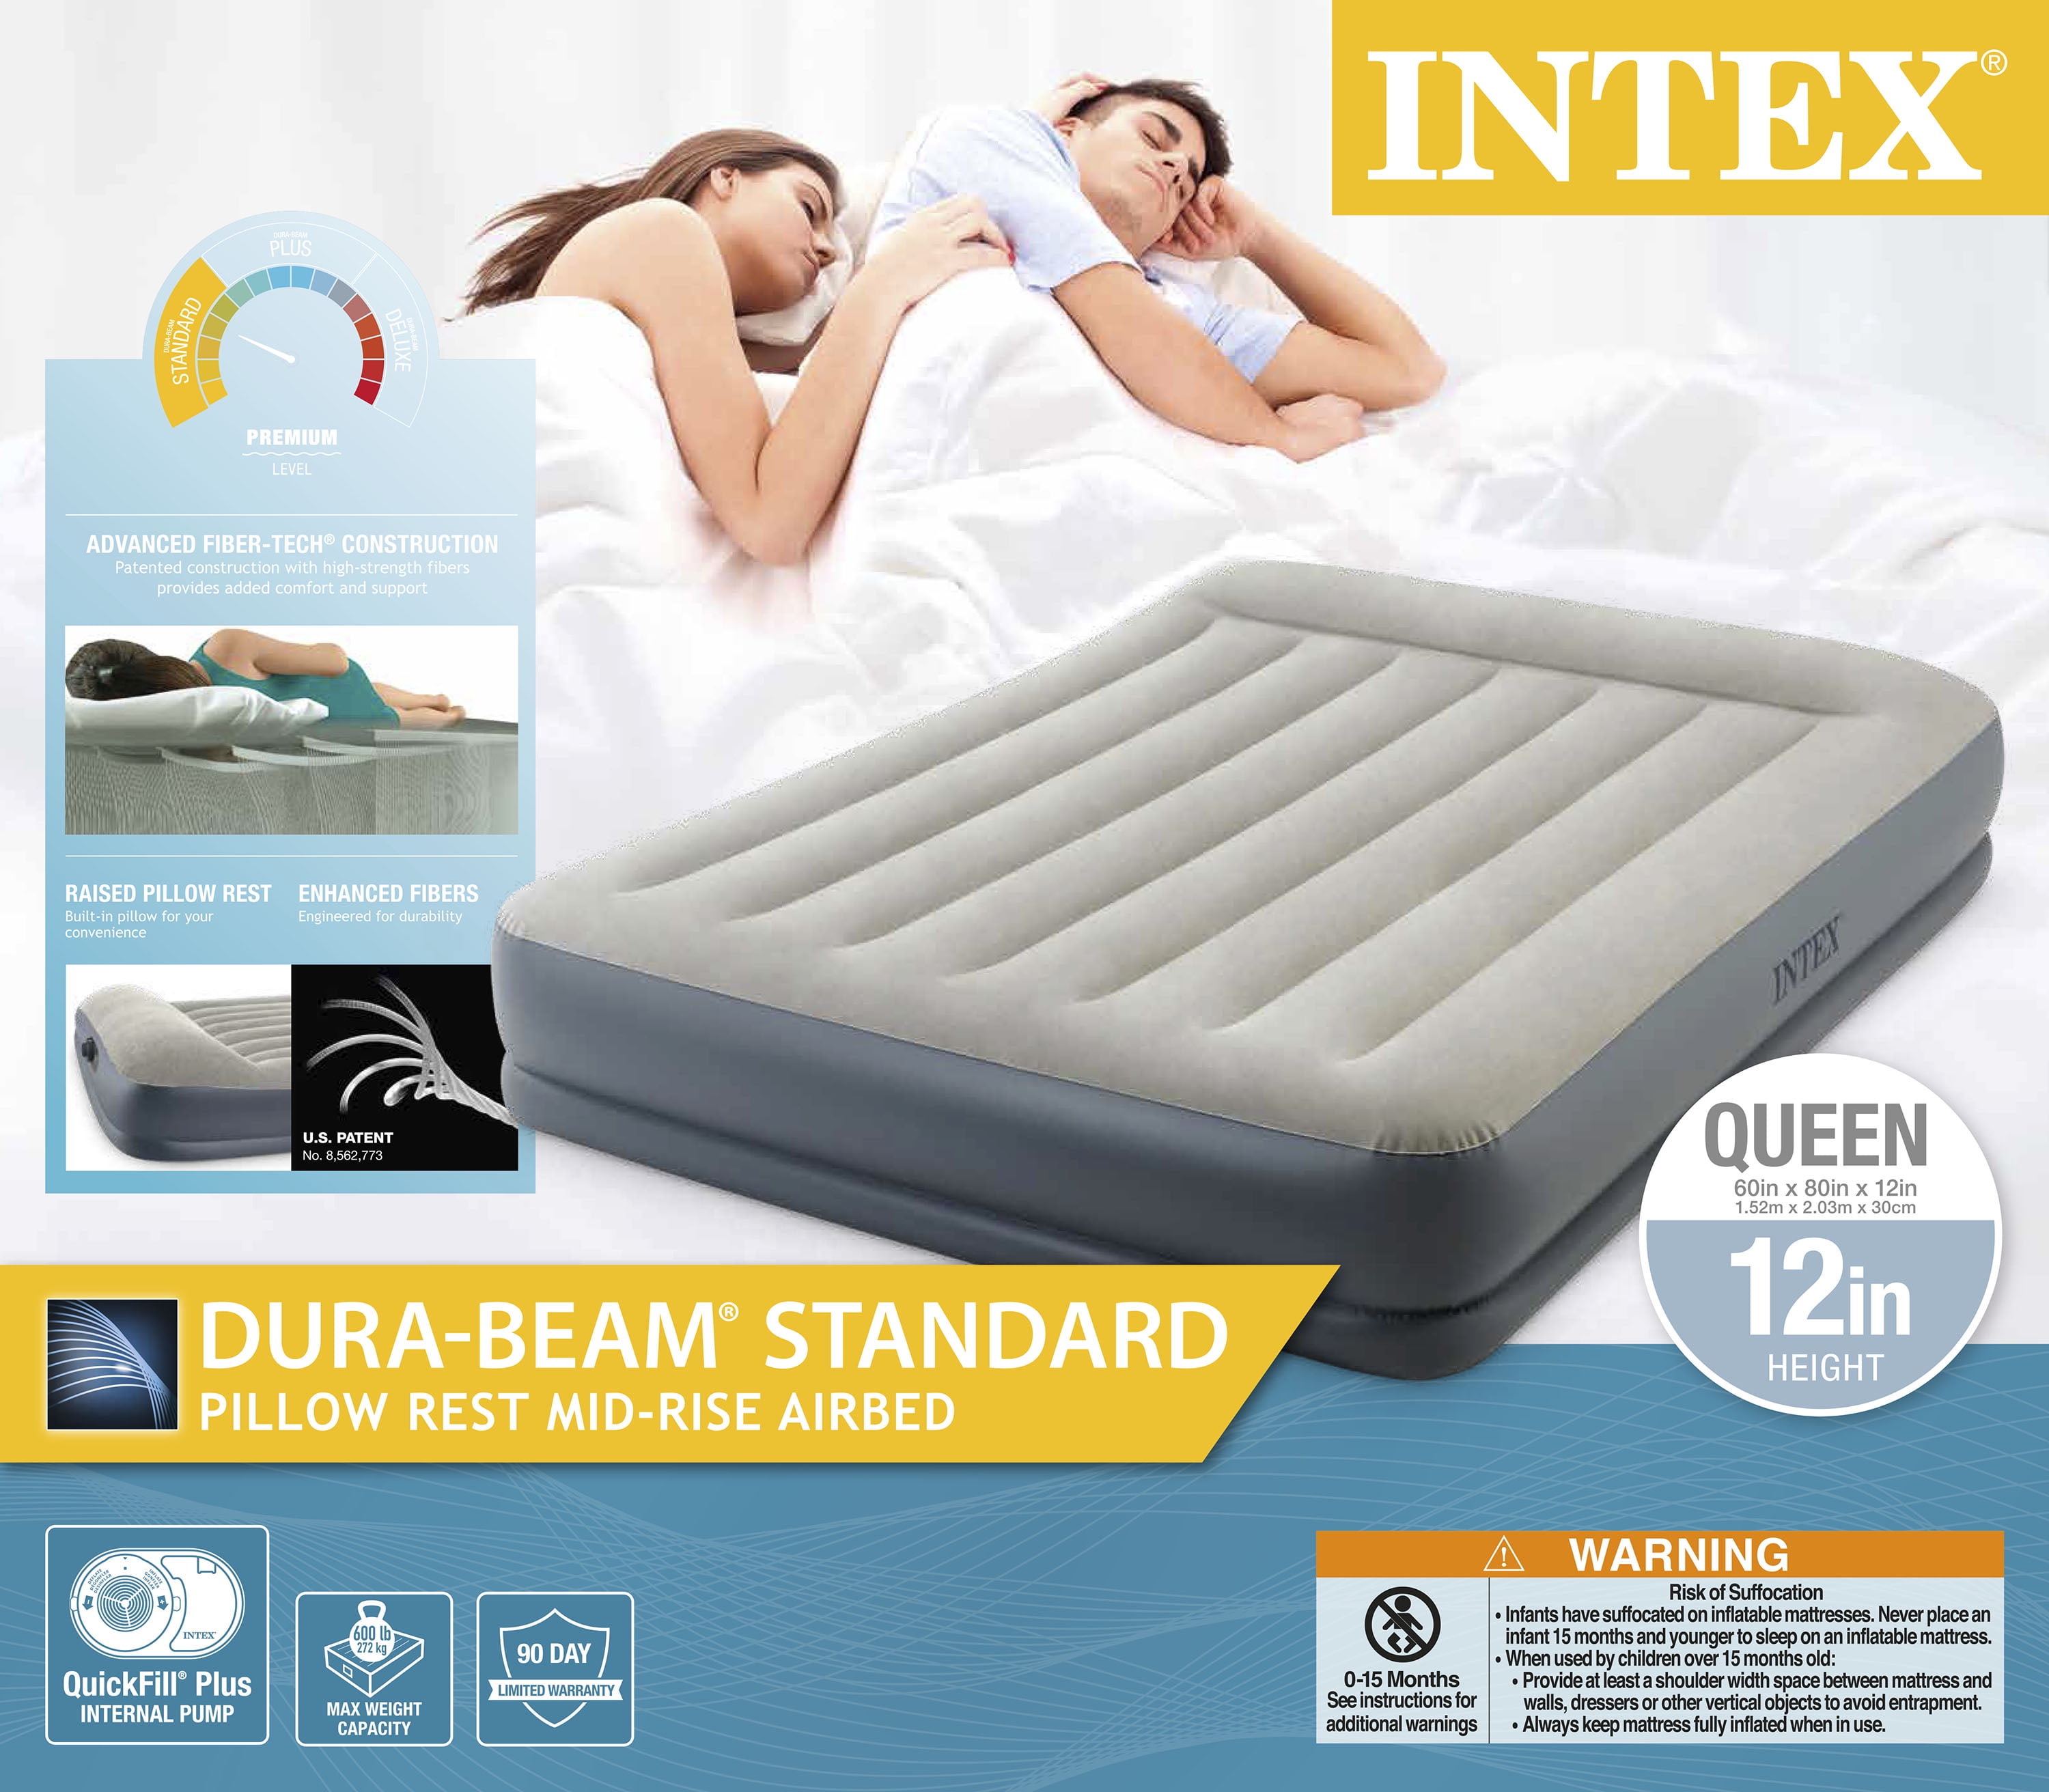 2 Pack Intex Queen Classic Pillow Rest Airbed Air Mattress with Built-In Pump 